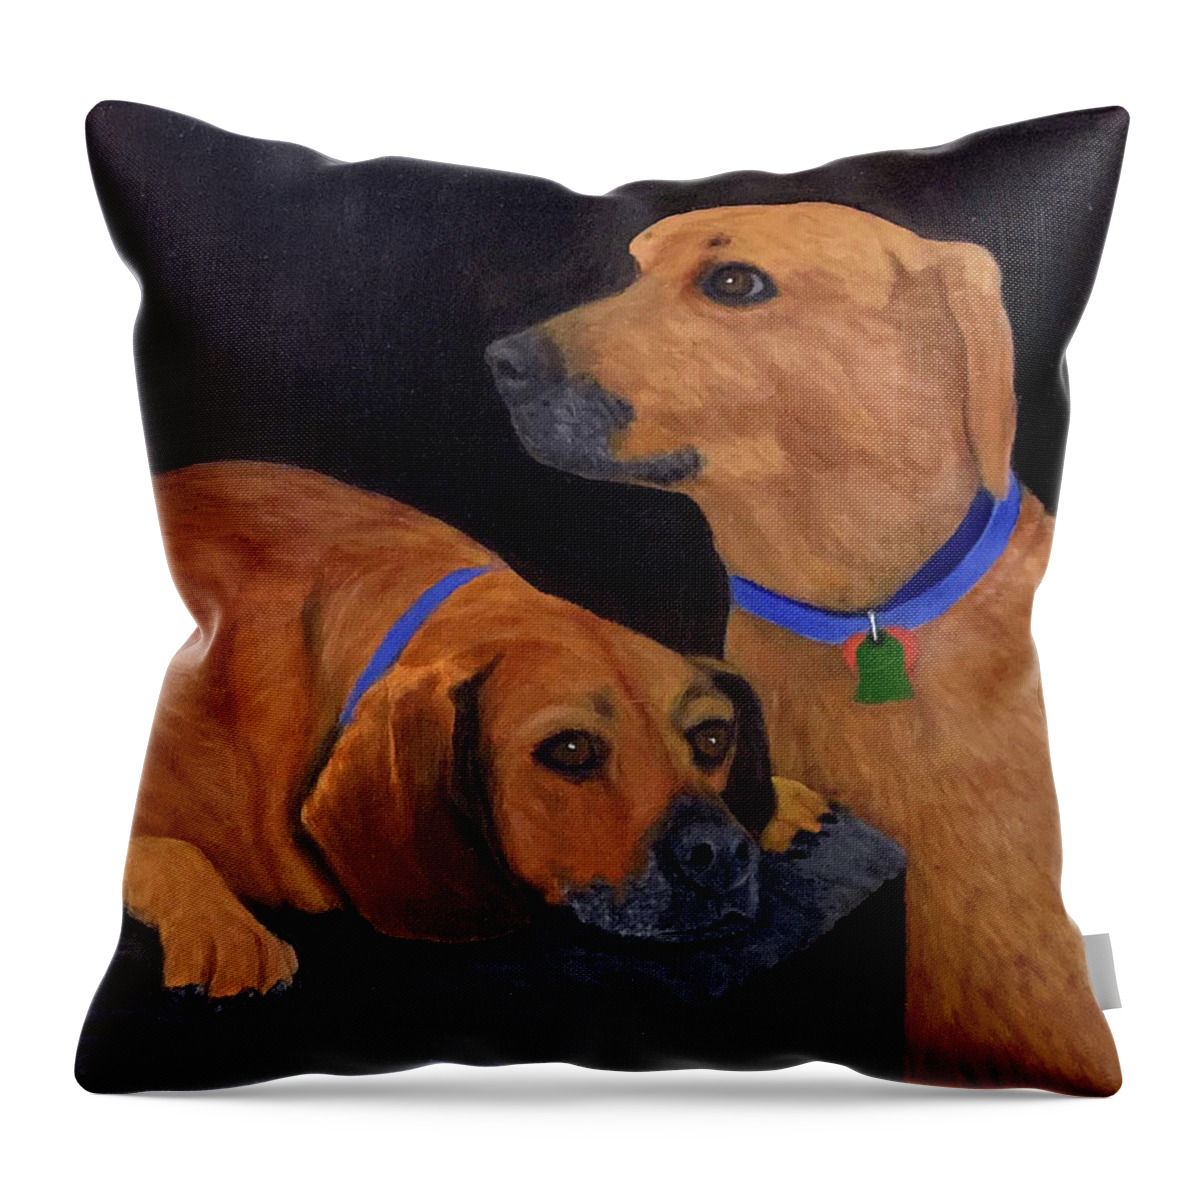 Dog Throw Pillow featuring the painting Dog Love by Karen Zuk Rosenblatt